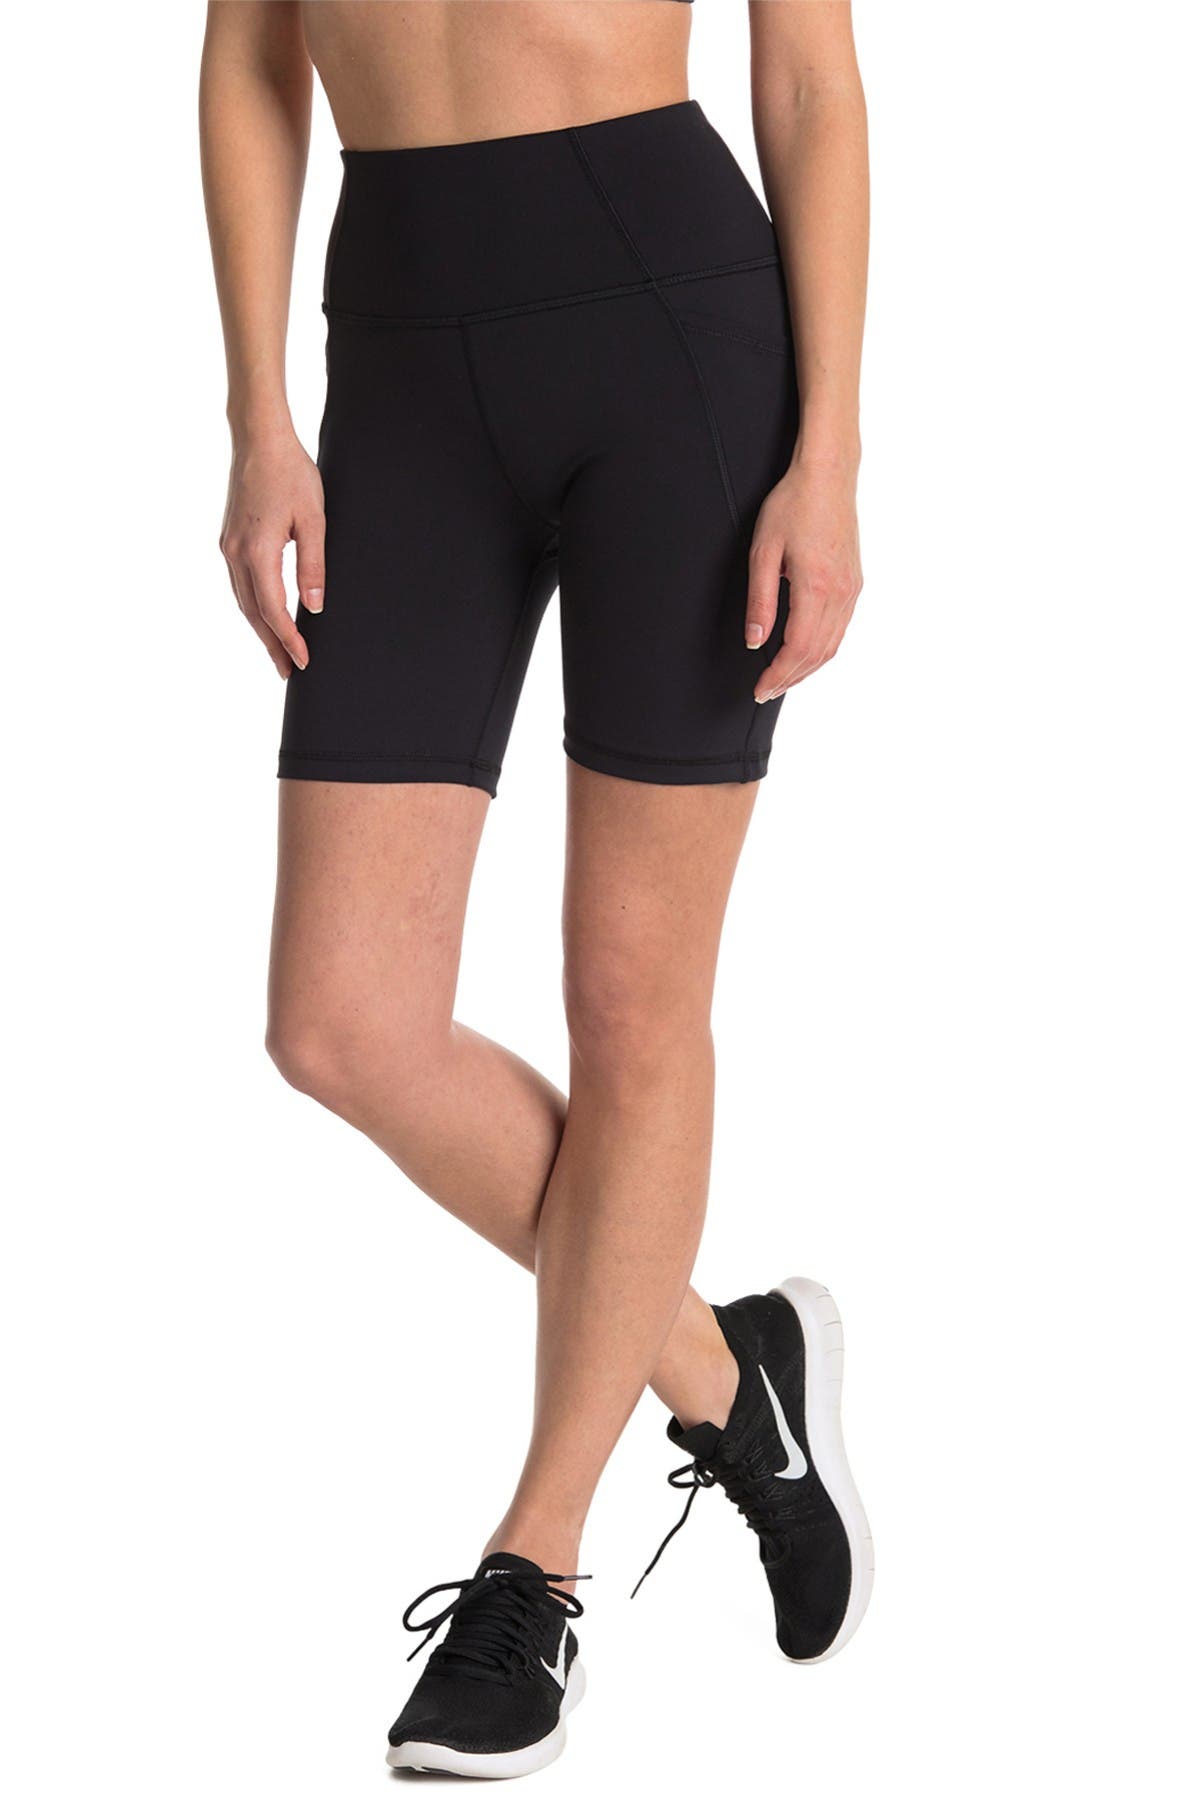 biker shorts nordstrom rack